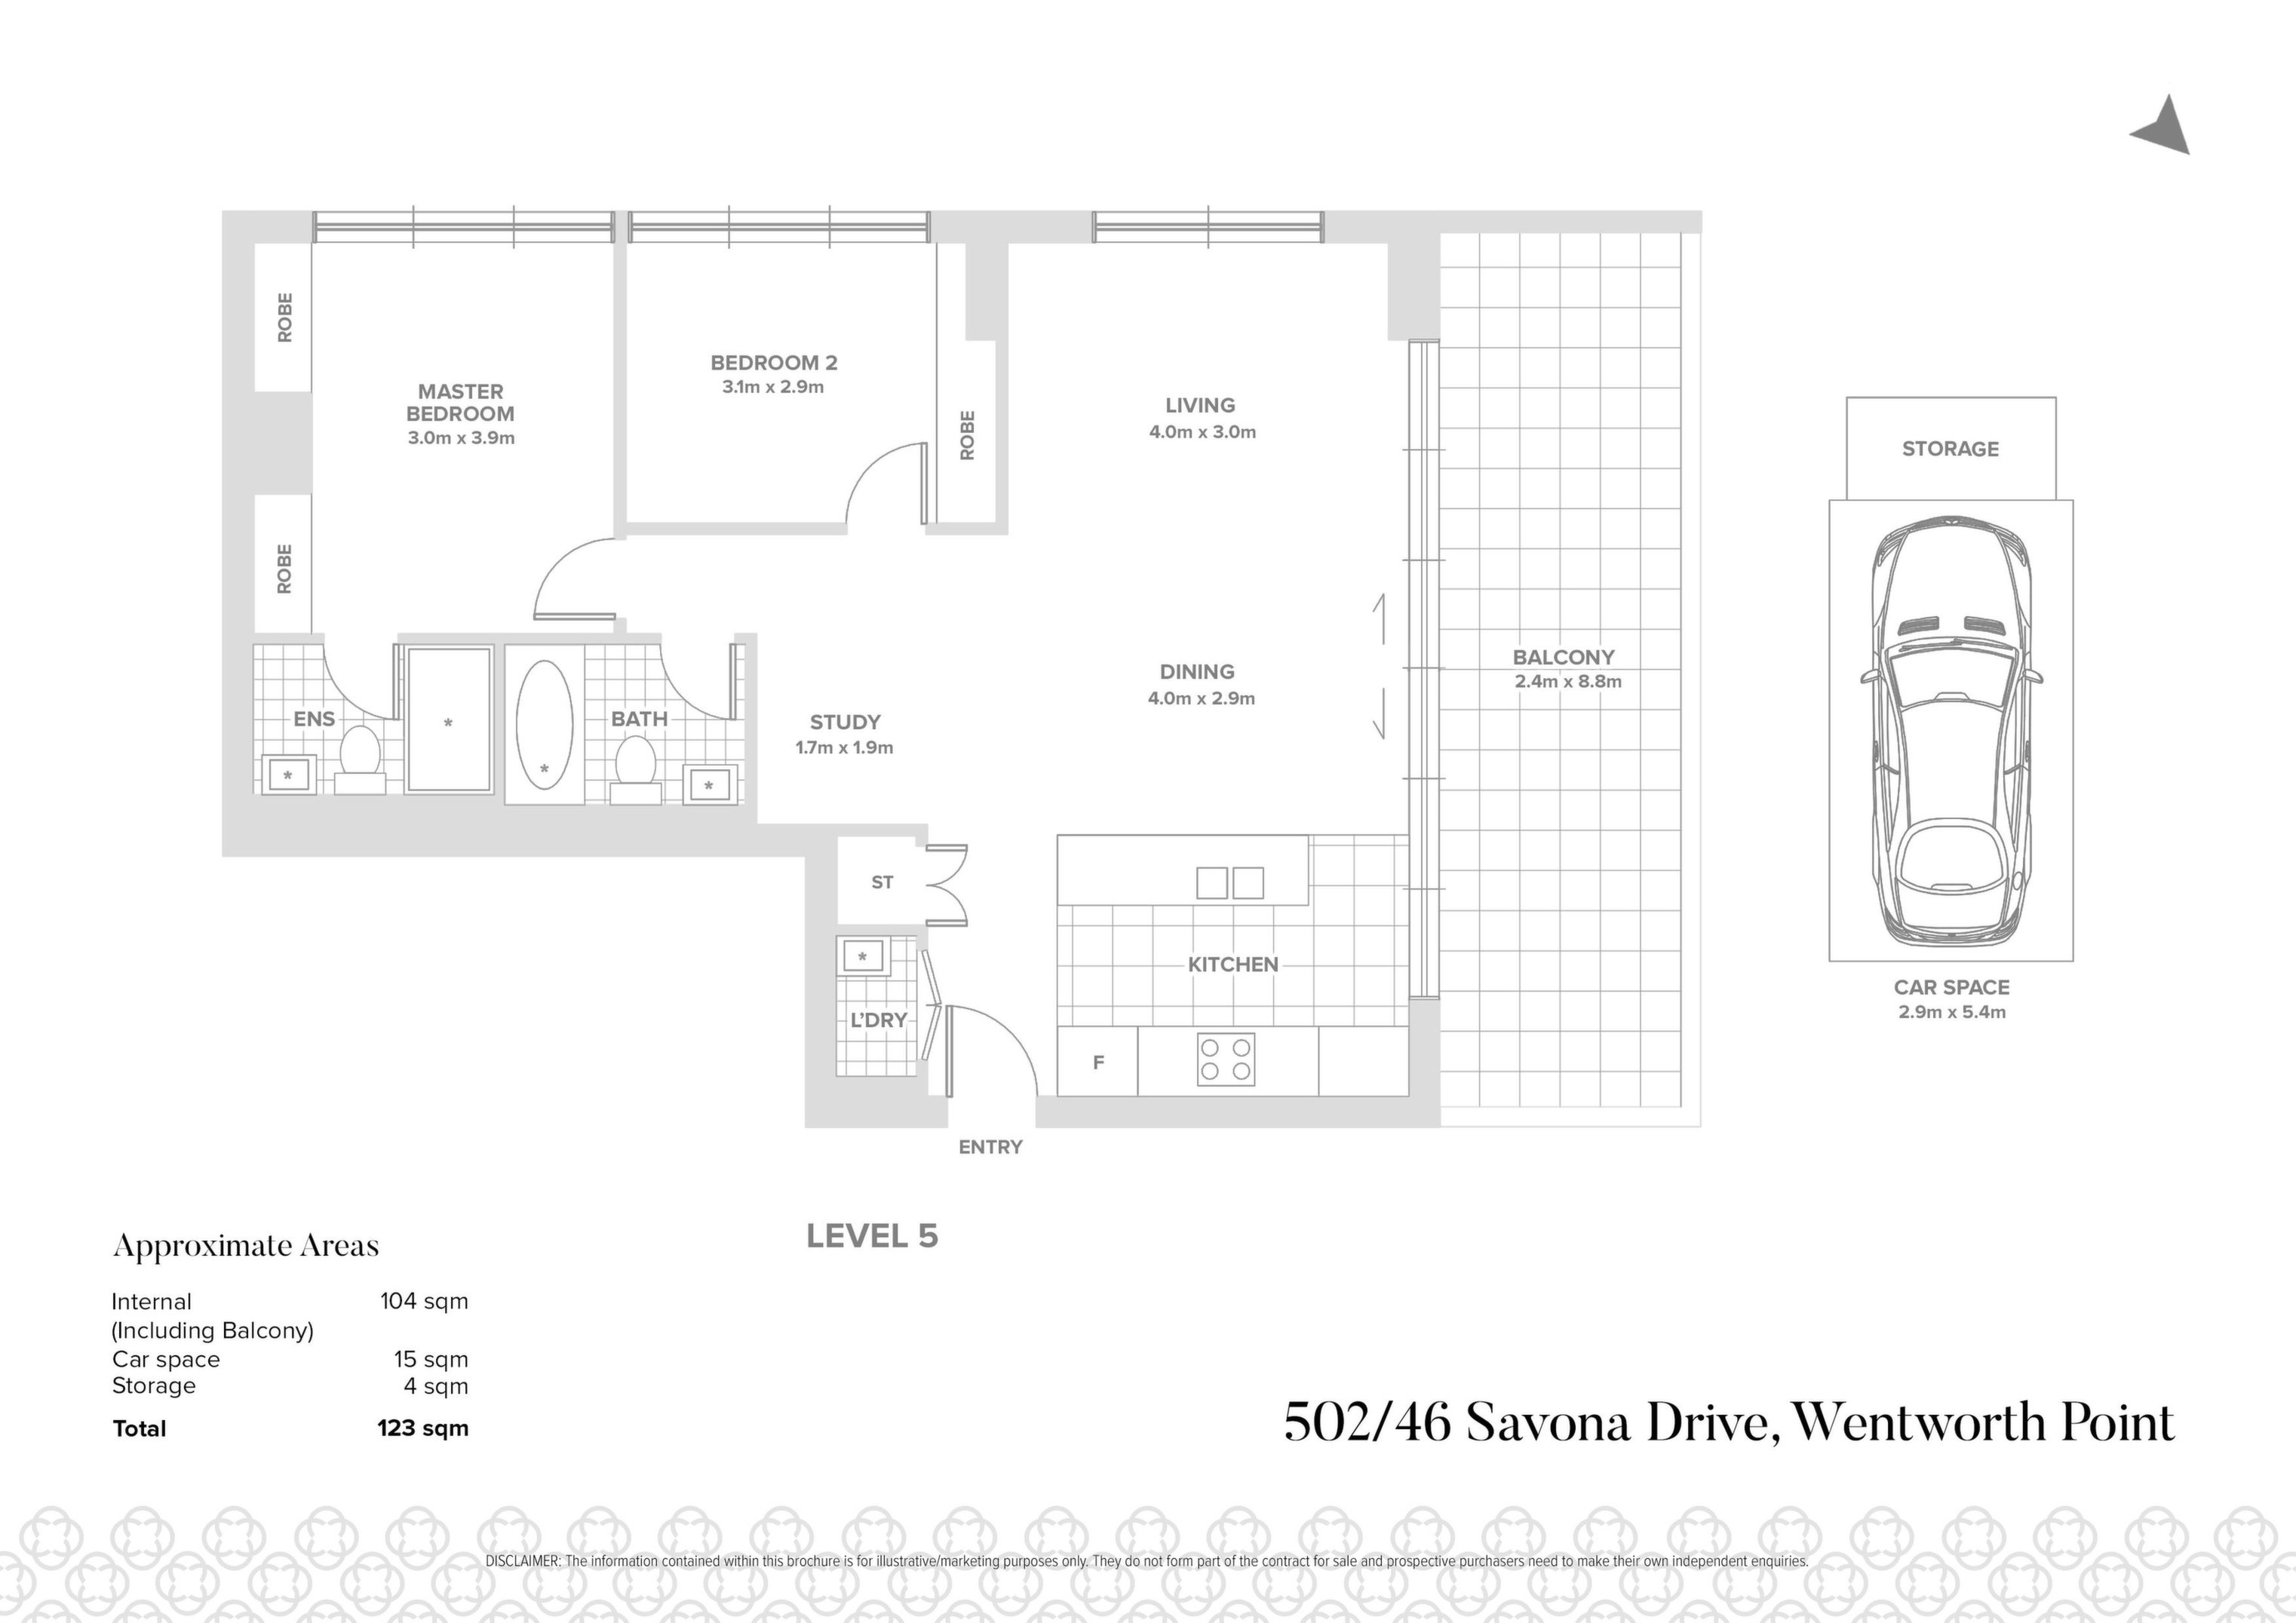 502/46 Savona Drive, Wentworth Point Sold by Chidiac Realty - floorplan